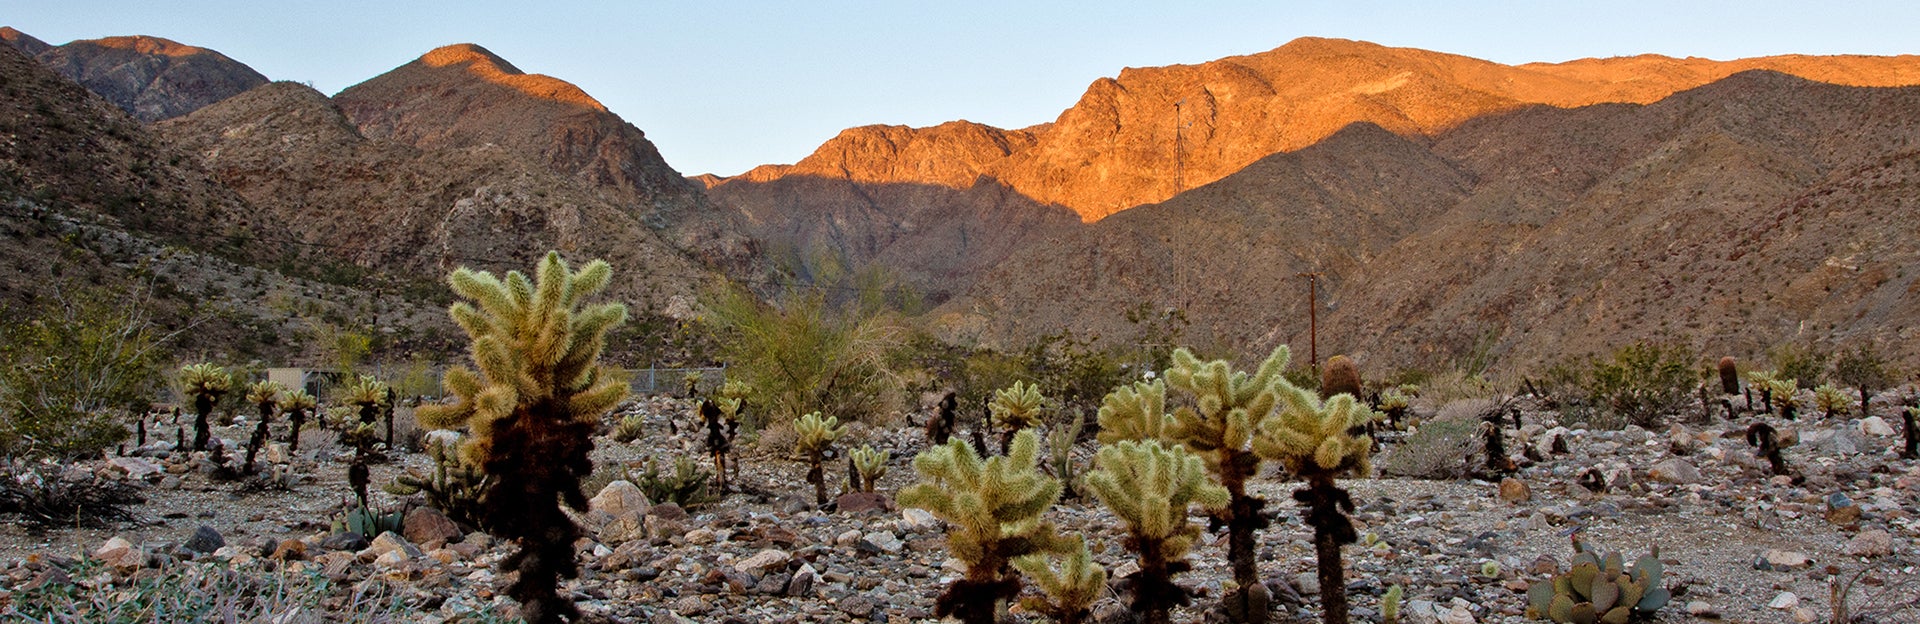 Boyd Deep Canyon, Cholla cacti